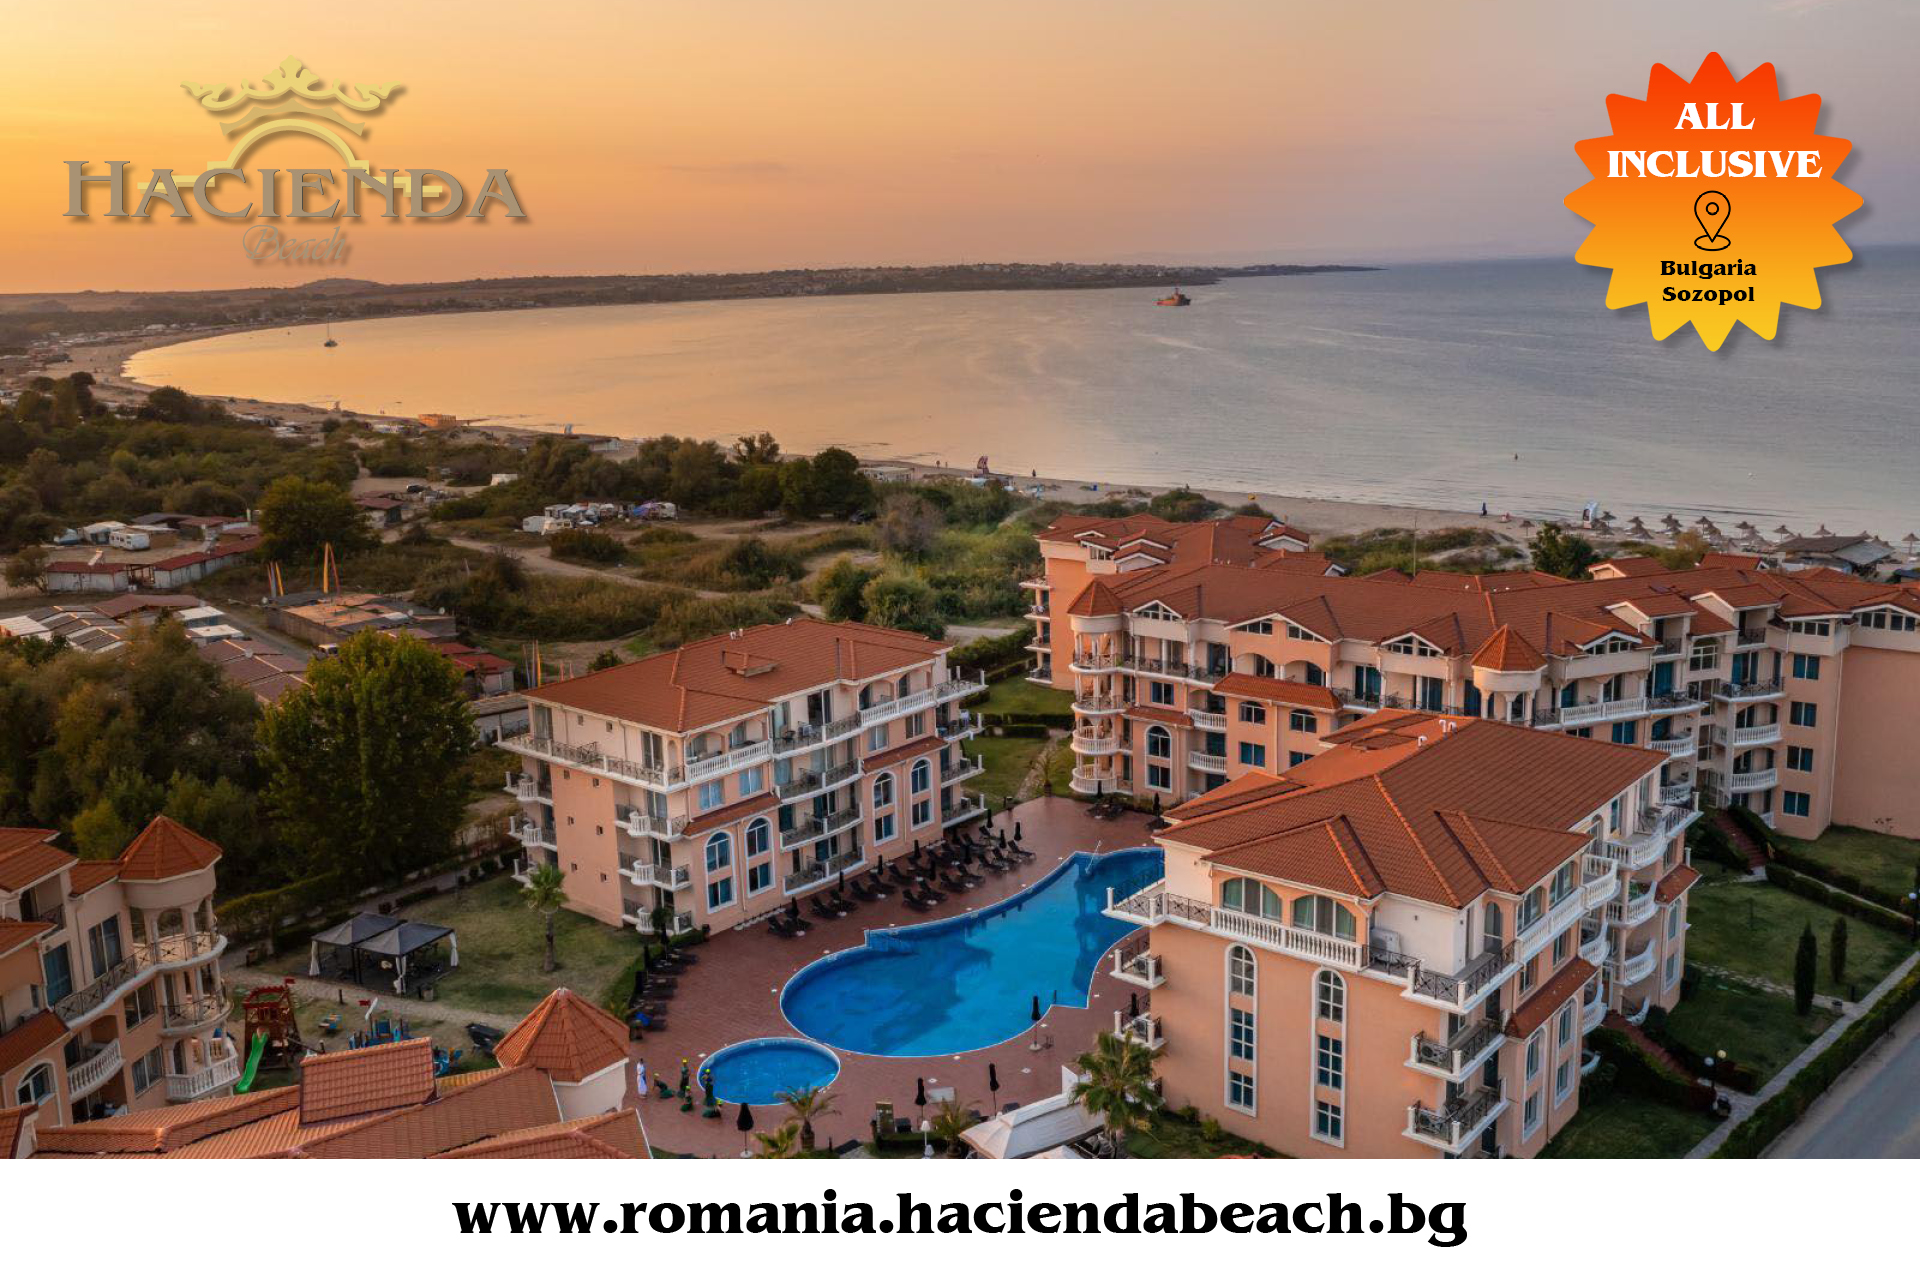 Hacienda Beach Romania